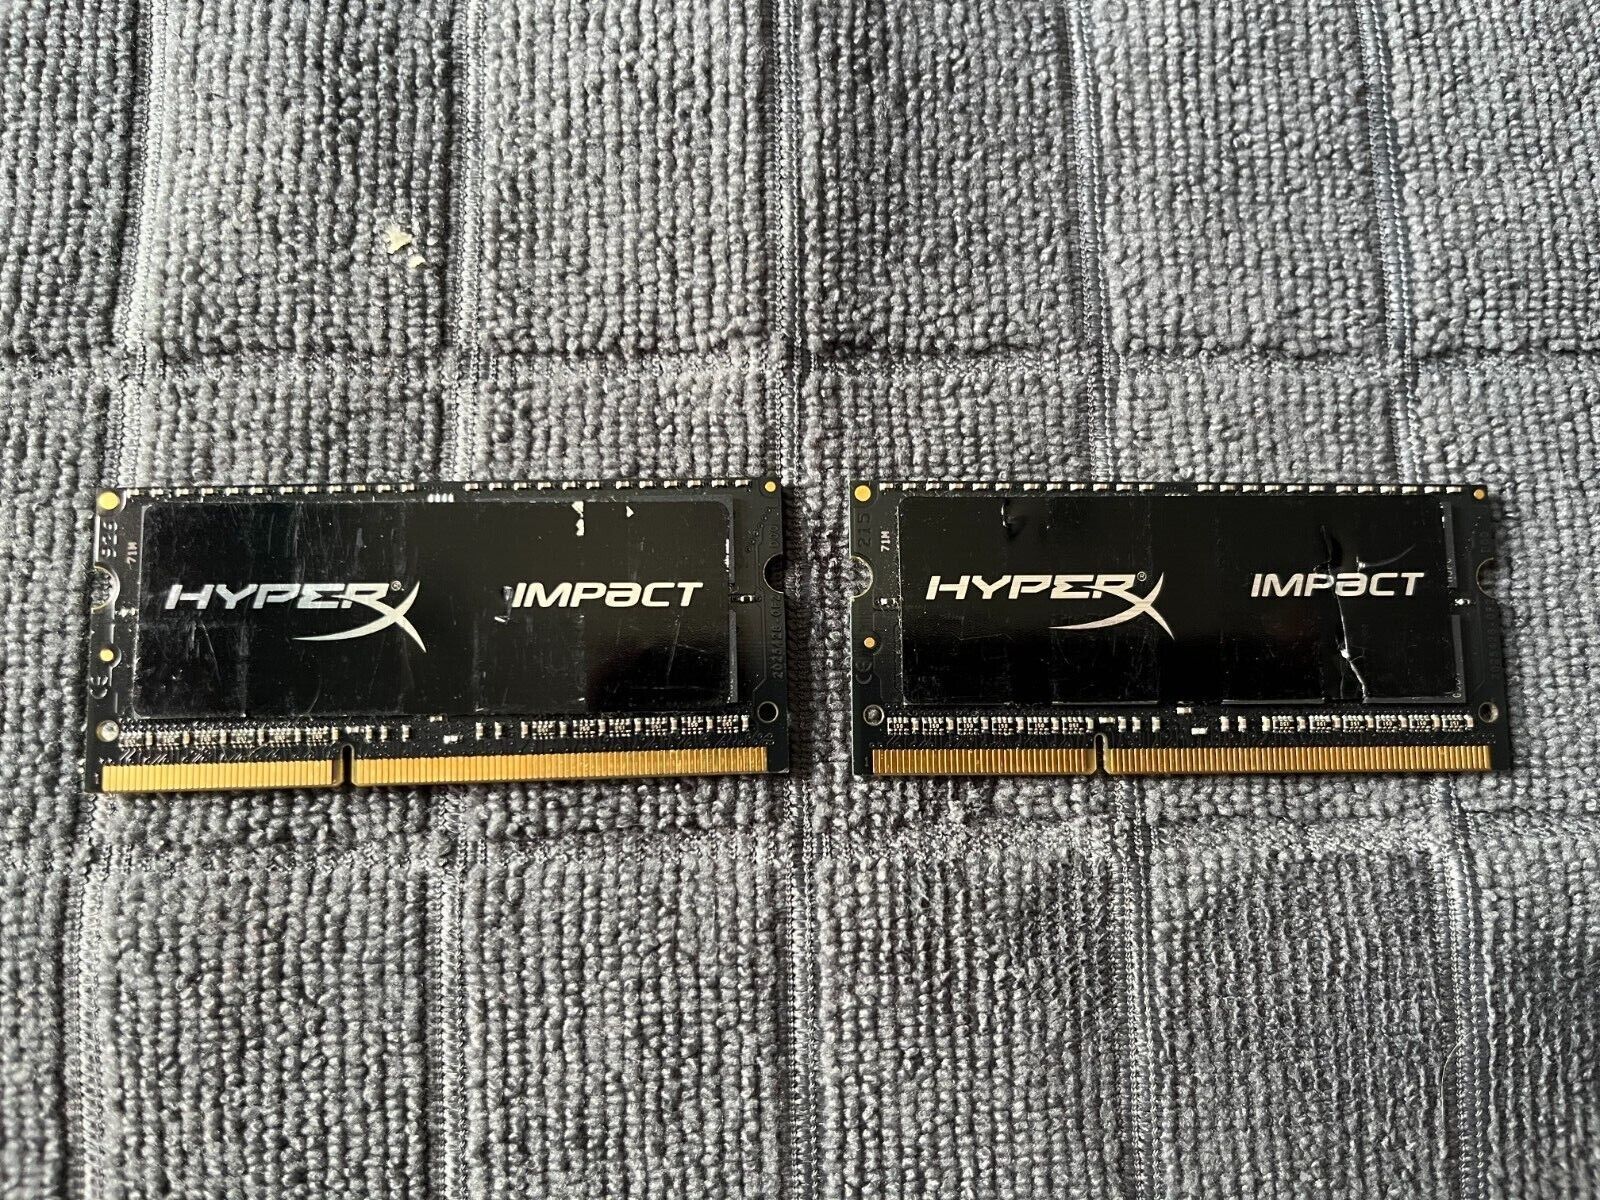 Kingston HYPERX IMPACT 16GB 2x8GB DDR3 1600MHZ HX316LS9IBK2/16 SODIMM Laptop RAM